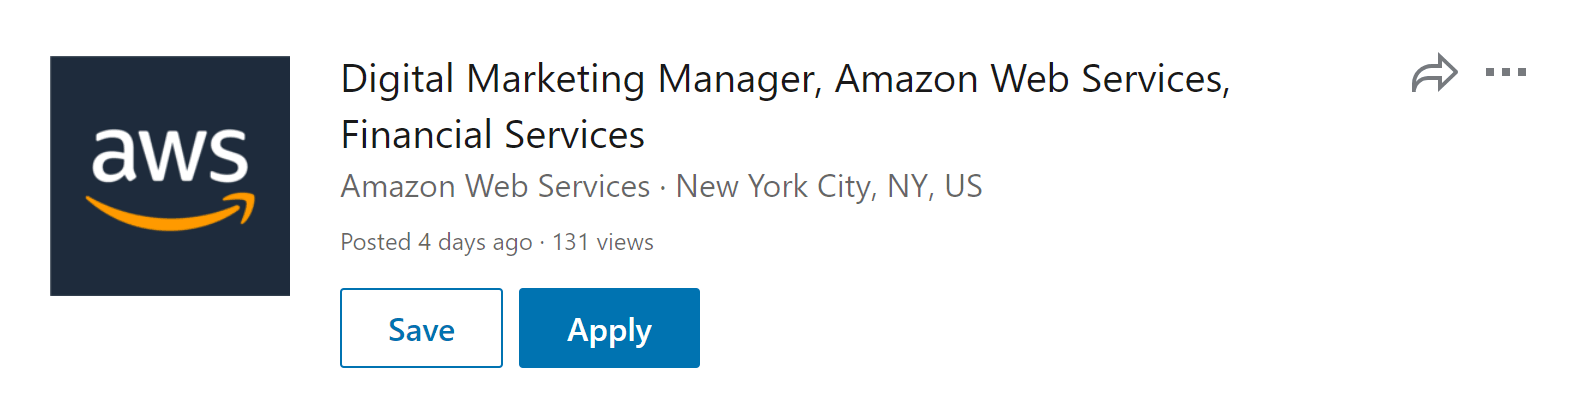 Screenshot of a job description on LinkedIn for Digital Marketing Manager role at Amazon